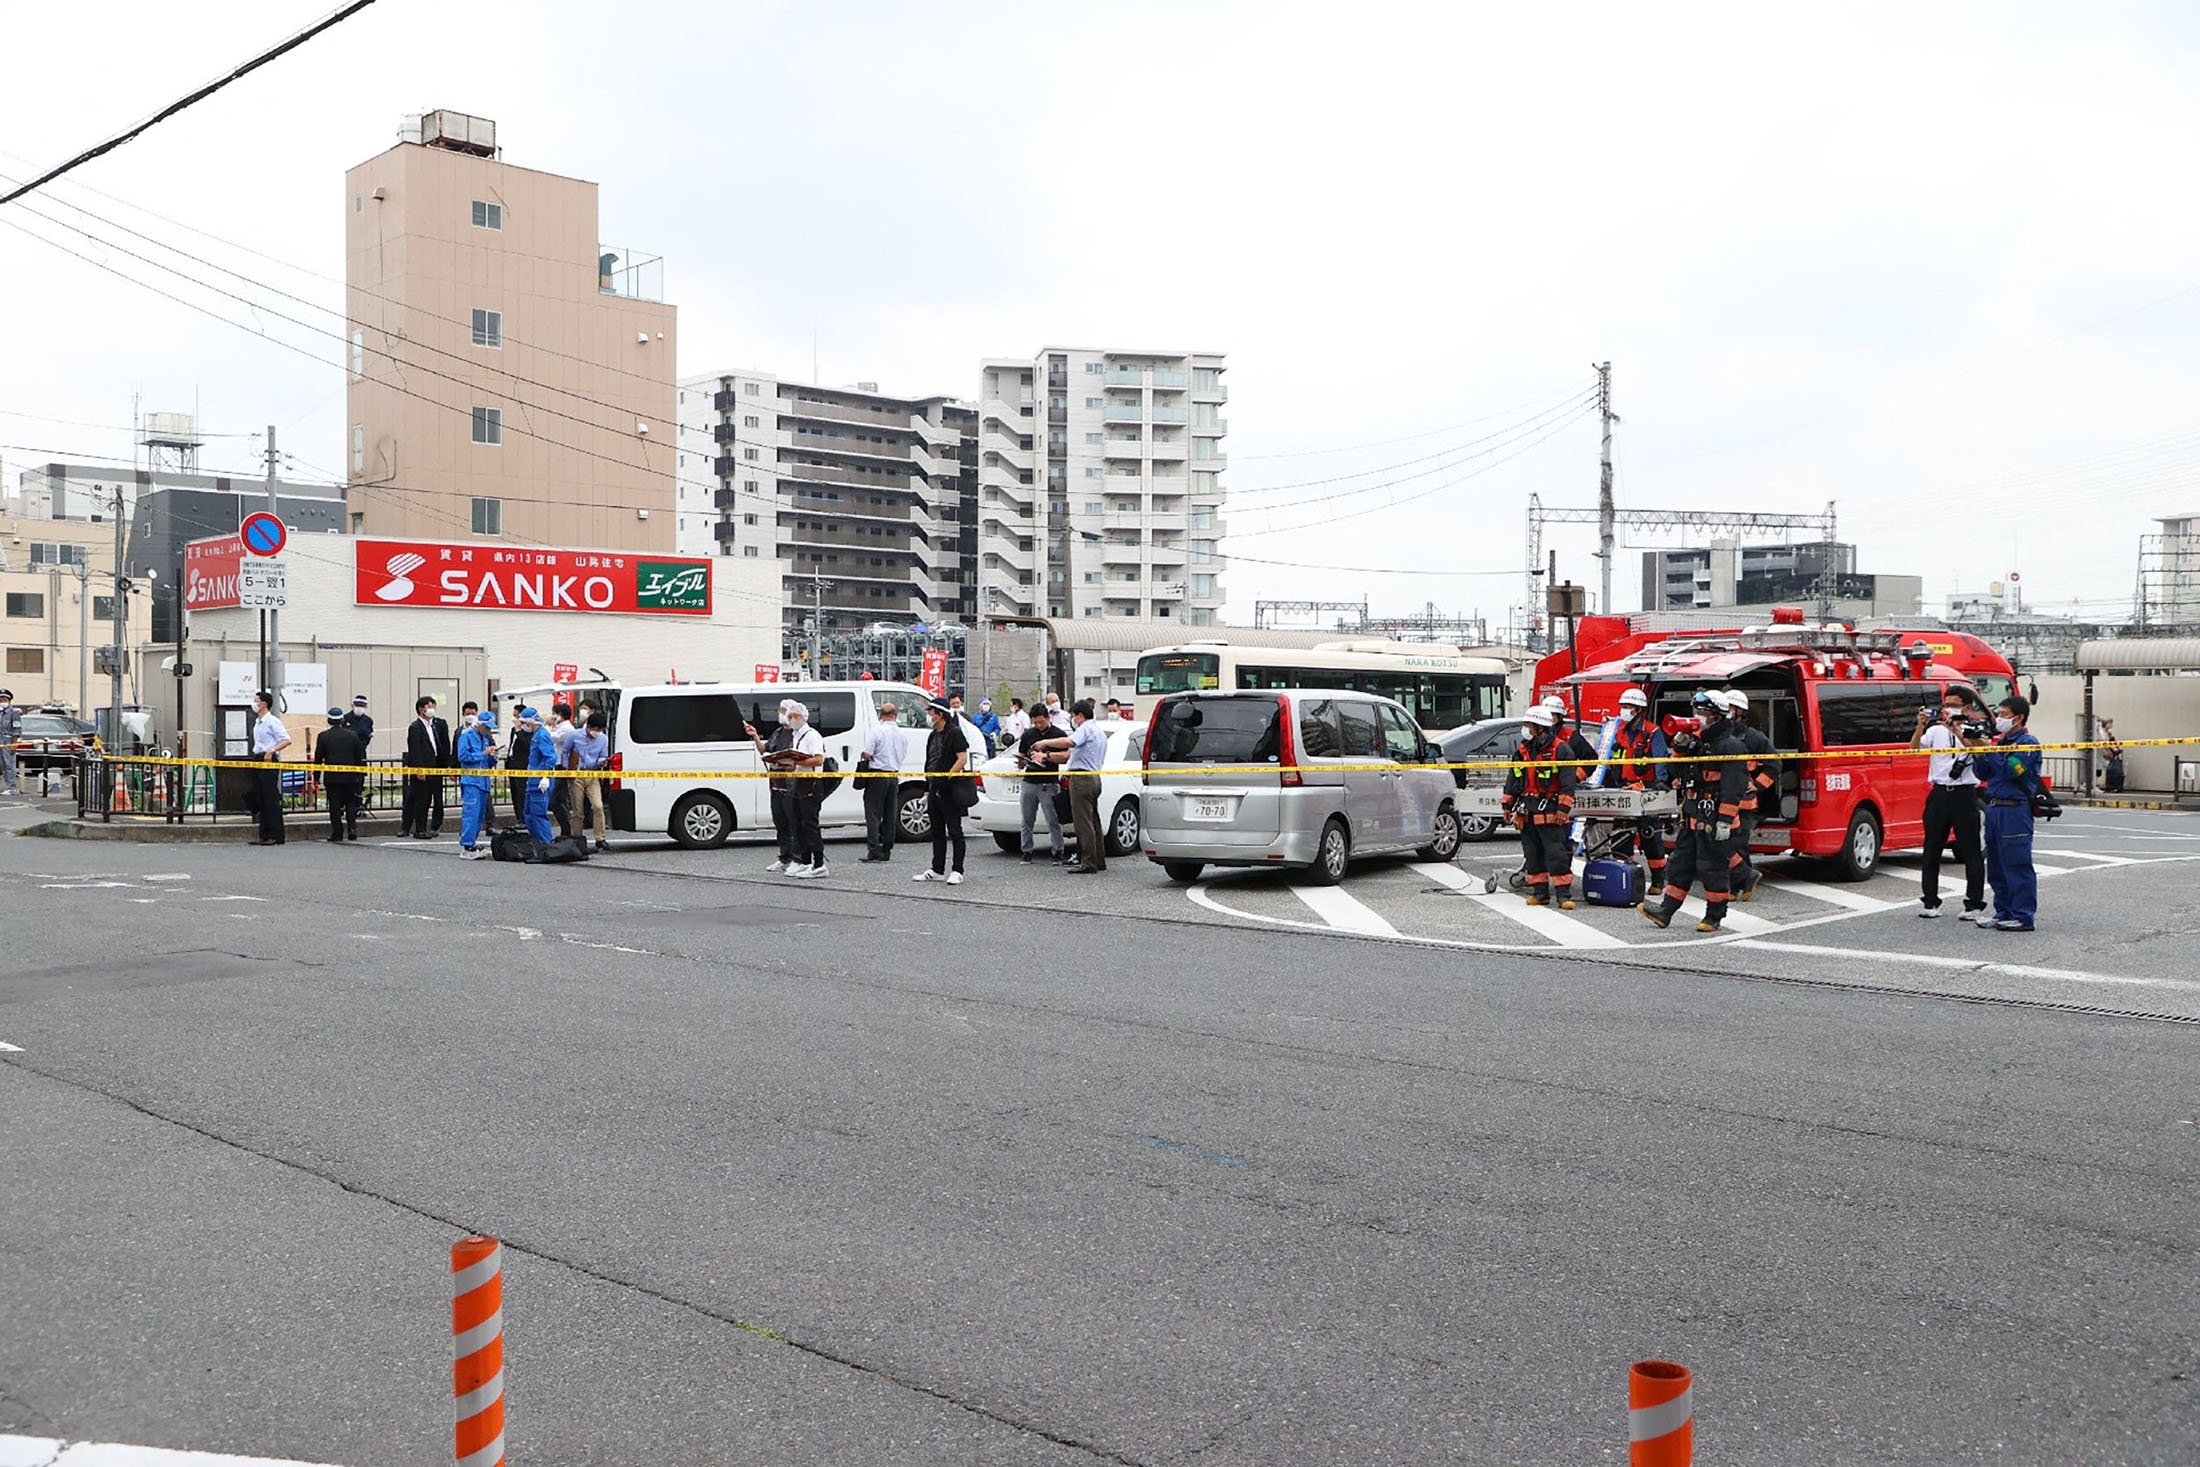 Pemandangan umum menunjukkan para pekerja di tempat kejadian setelah serangan terhadap mantan perdana menteri Jepang Shinzo Abe di alun-alun stasiun Kintetsu Yamato-Saidaiji di Nara, Jepang barat, 8 Juli 2022. (AFP Photo)